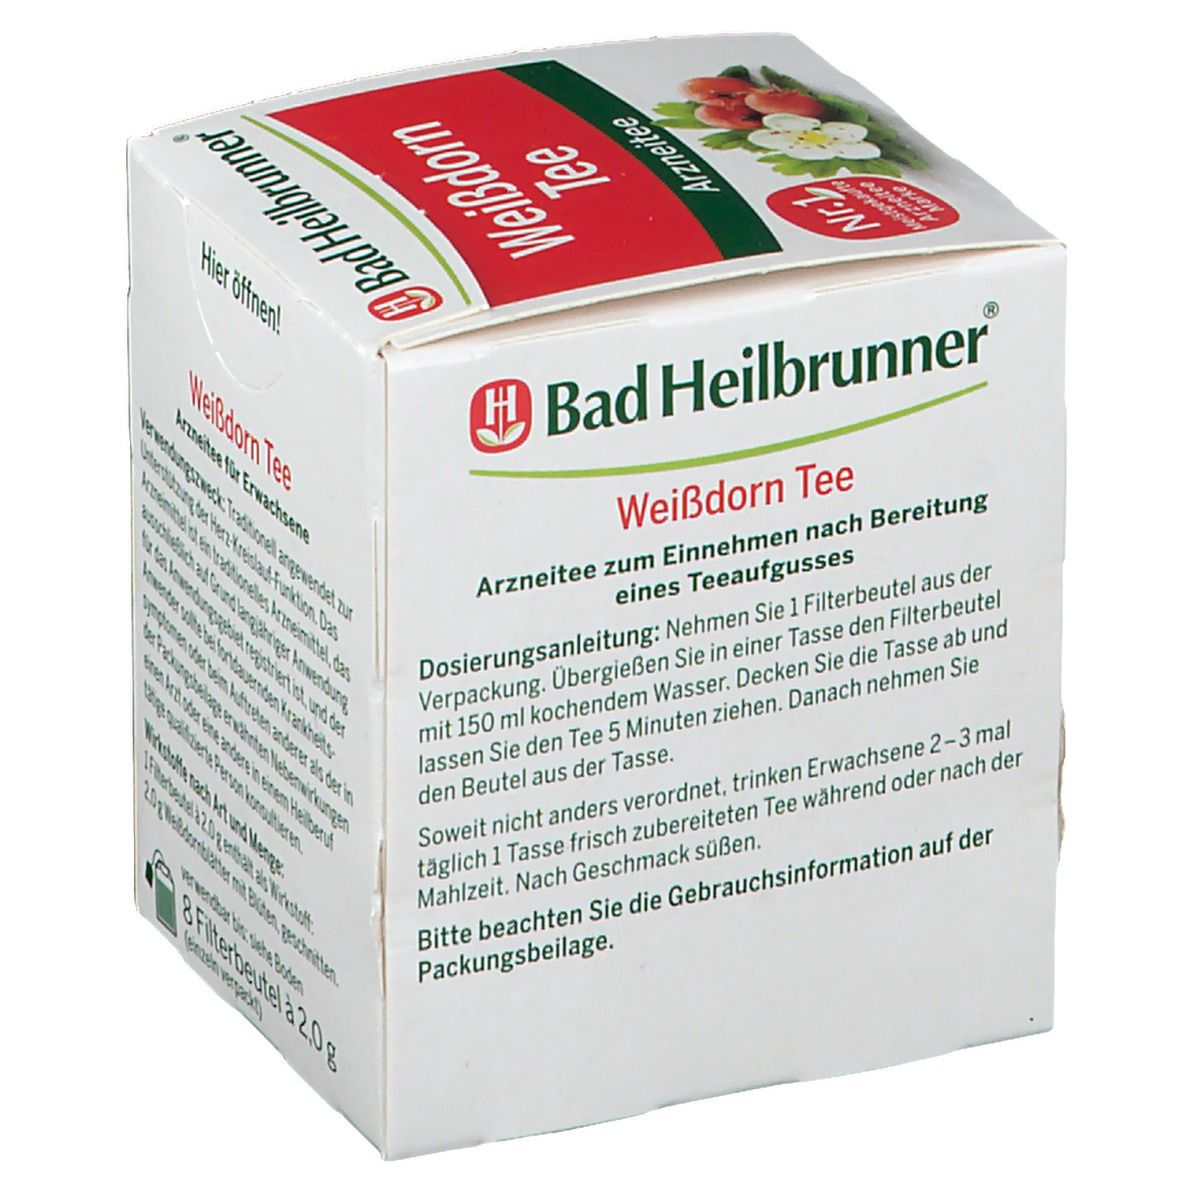 Bad Heilbrunner® Weißdorn Tee